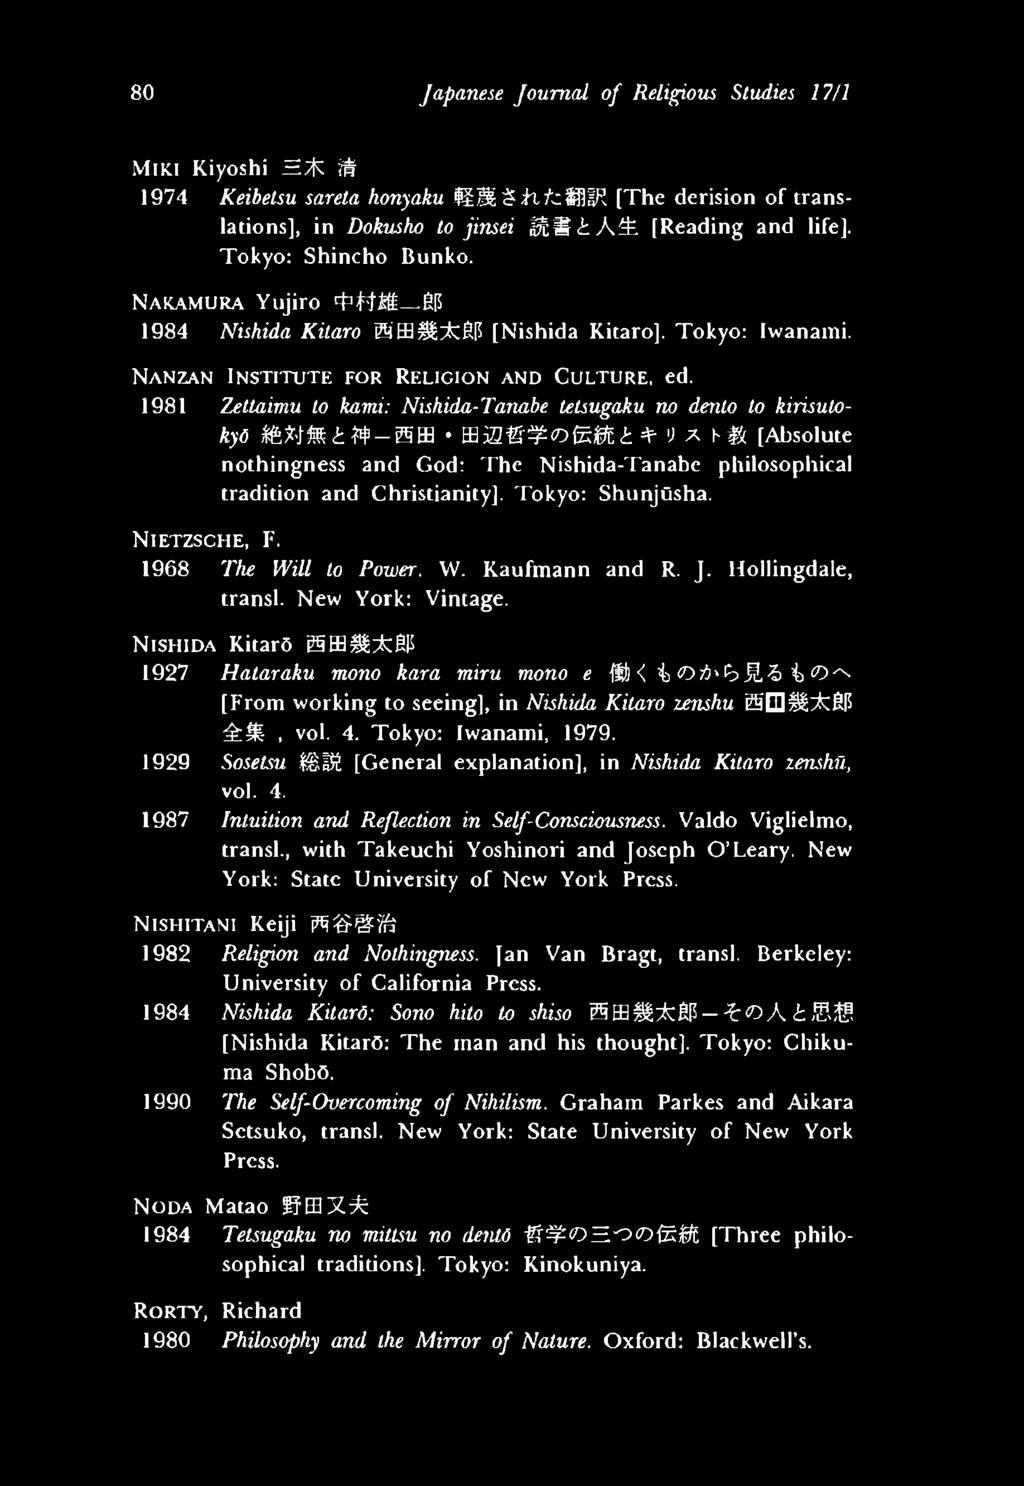 1981 Zettaimu to kami: Nishida-Tanabe tetsugaku no dento to kirisutok y d 絶対無と神一西田 田辺哲学の伝統とキリスト教 [Absolute nothingness and God: The Nishida-Tanabe philosophical tradition and Christianity].